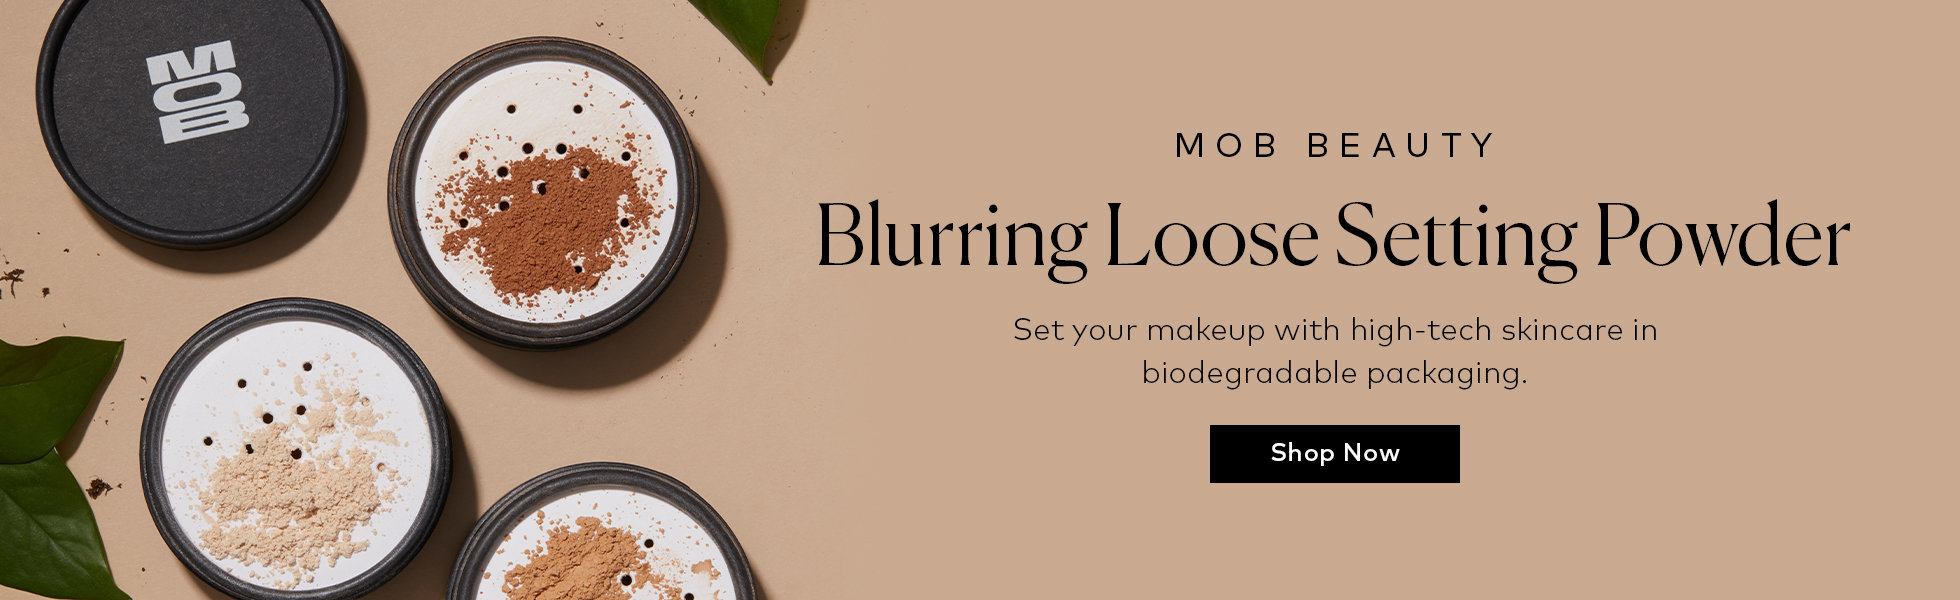 Shop the MOB Beauty Blurring Loose Setting Powder at Beautylish.com